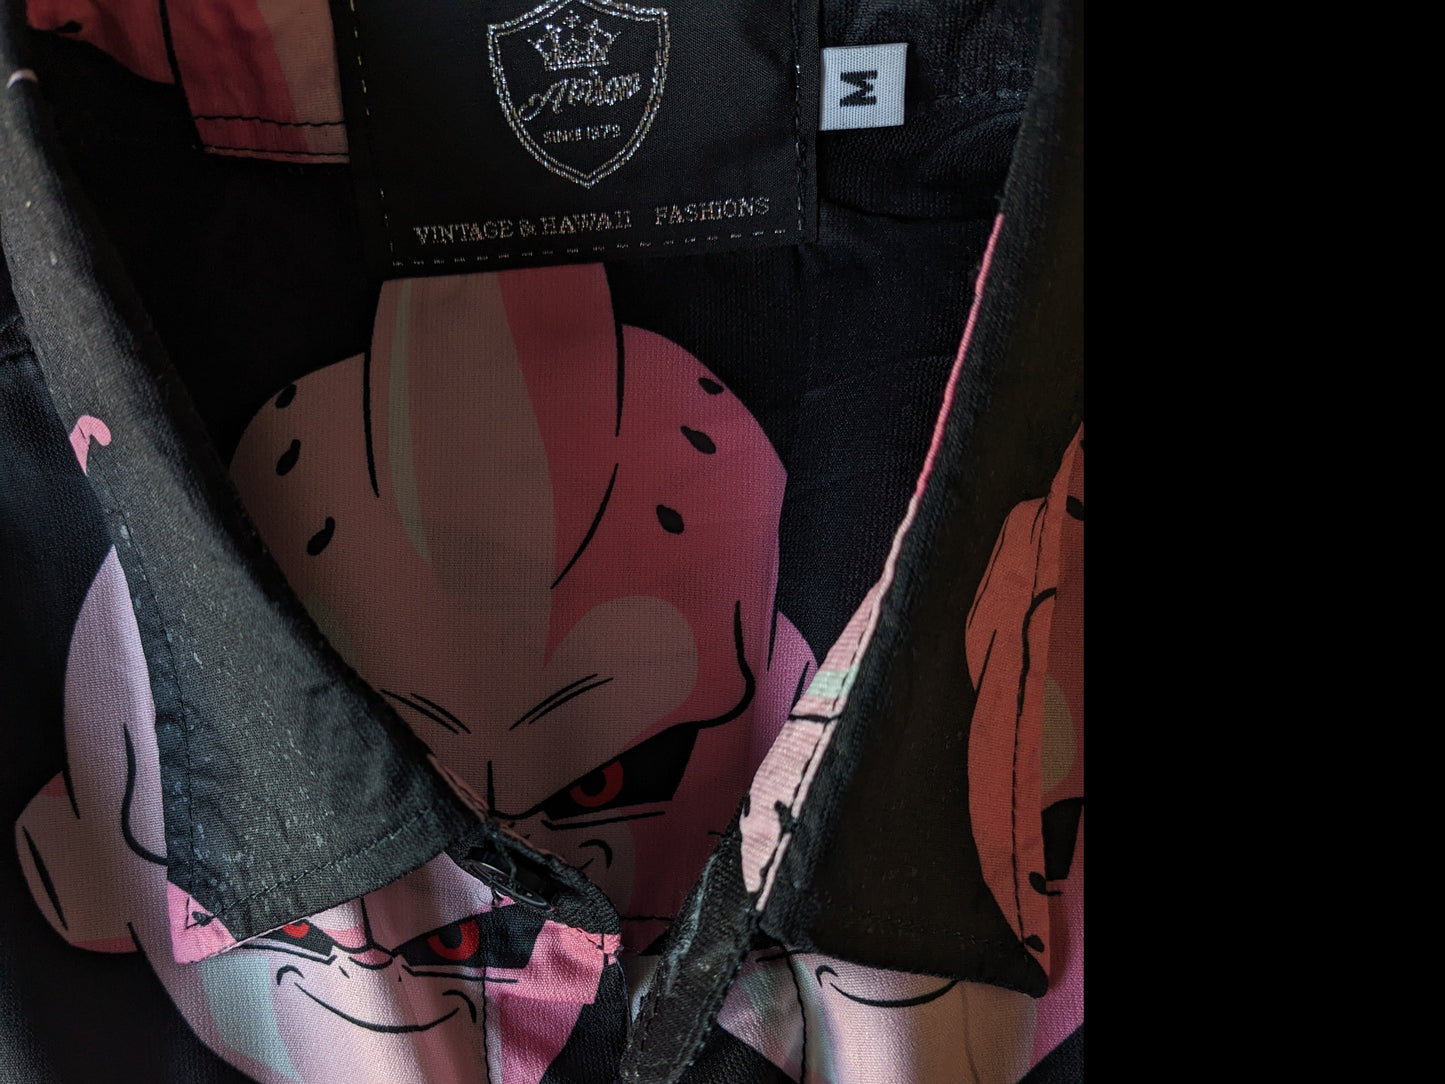 Dragon Ball Z Kid Buu Print Shirt. Impression rose noir. Taille M.